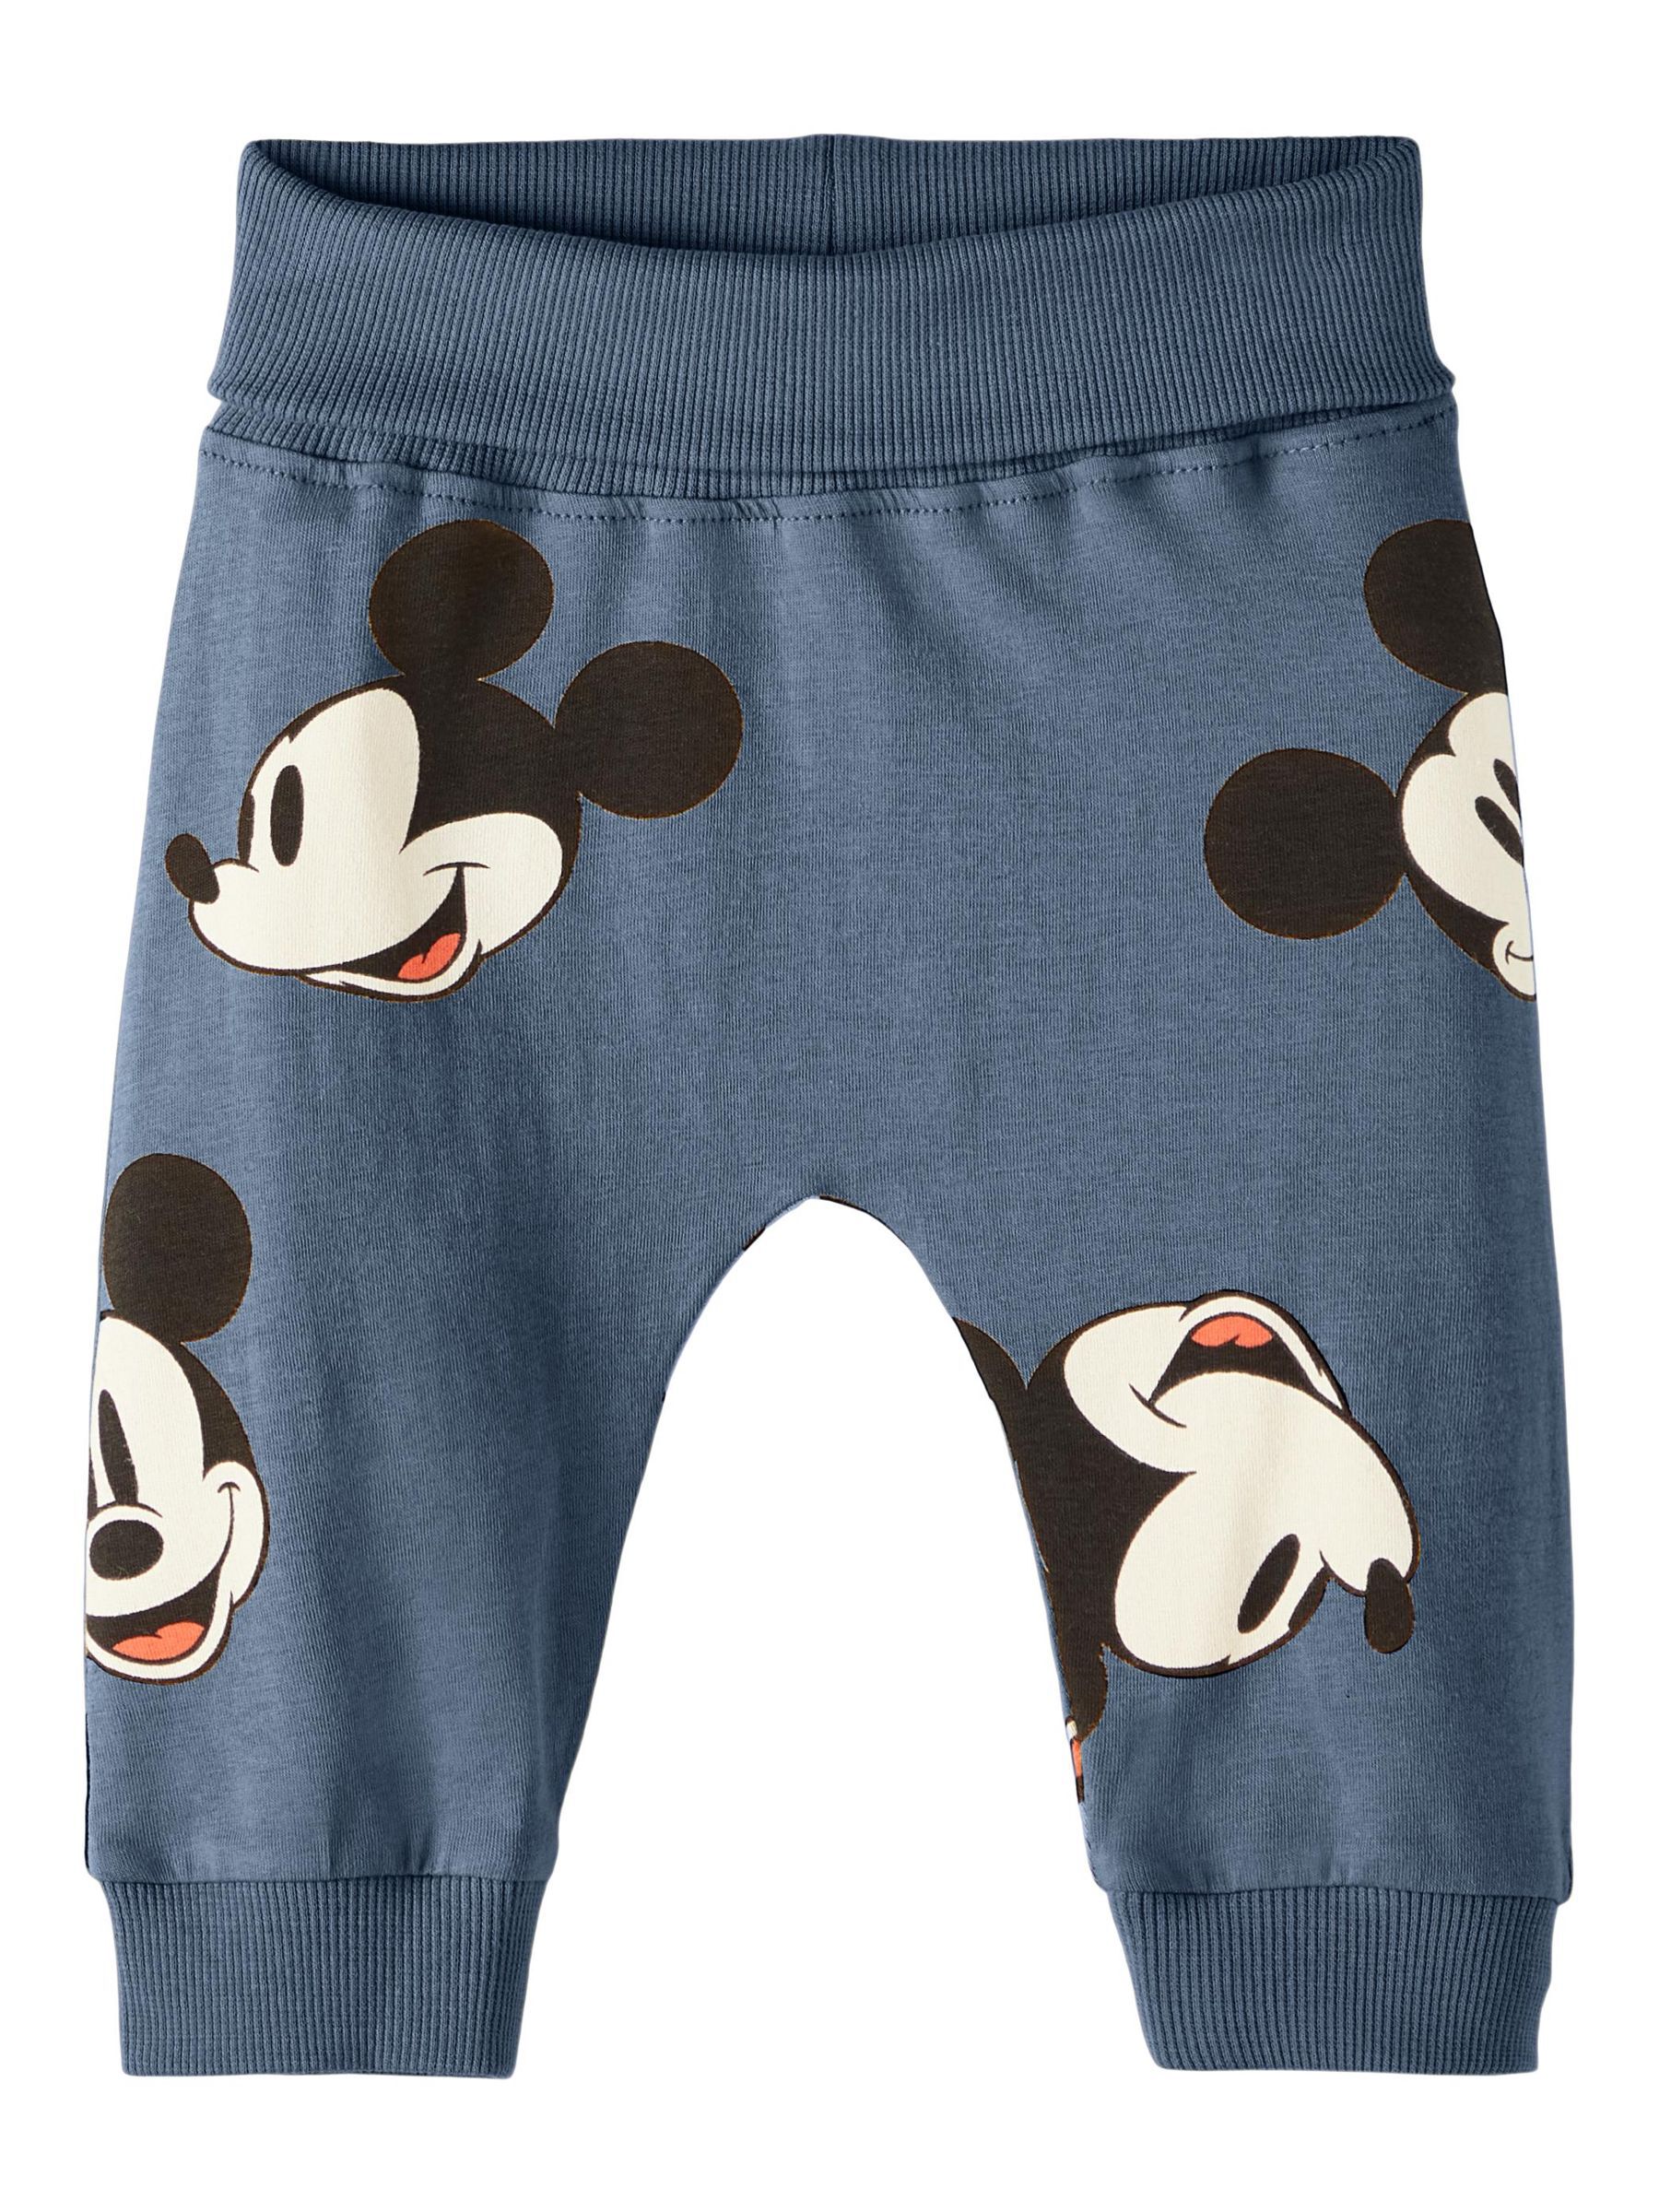 Disney Mickey Mouse Pajama Pants Sleepwear Pjs Unisex Kids Size 5 EUC | eBay